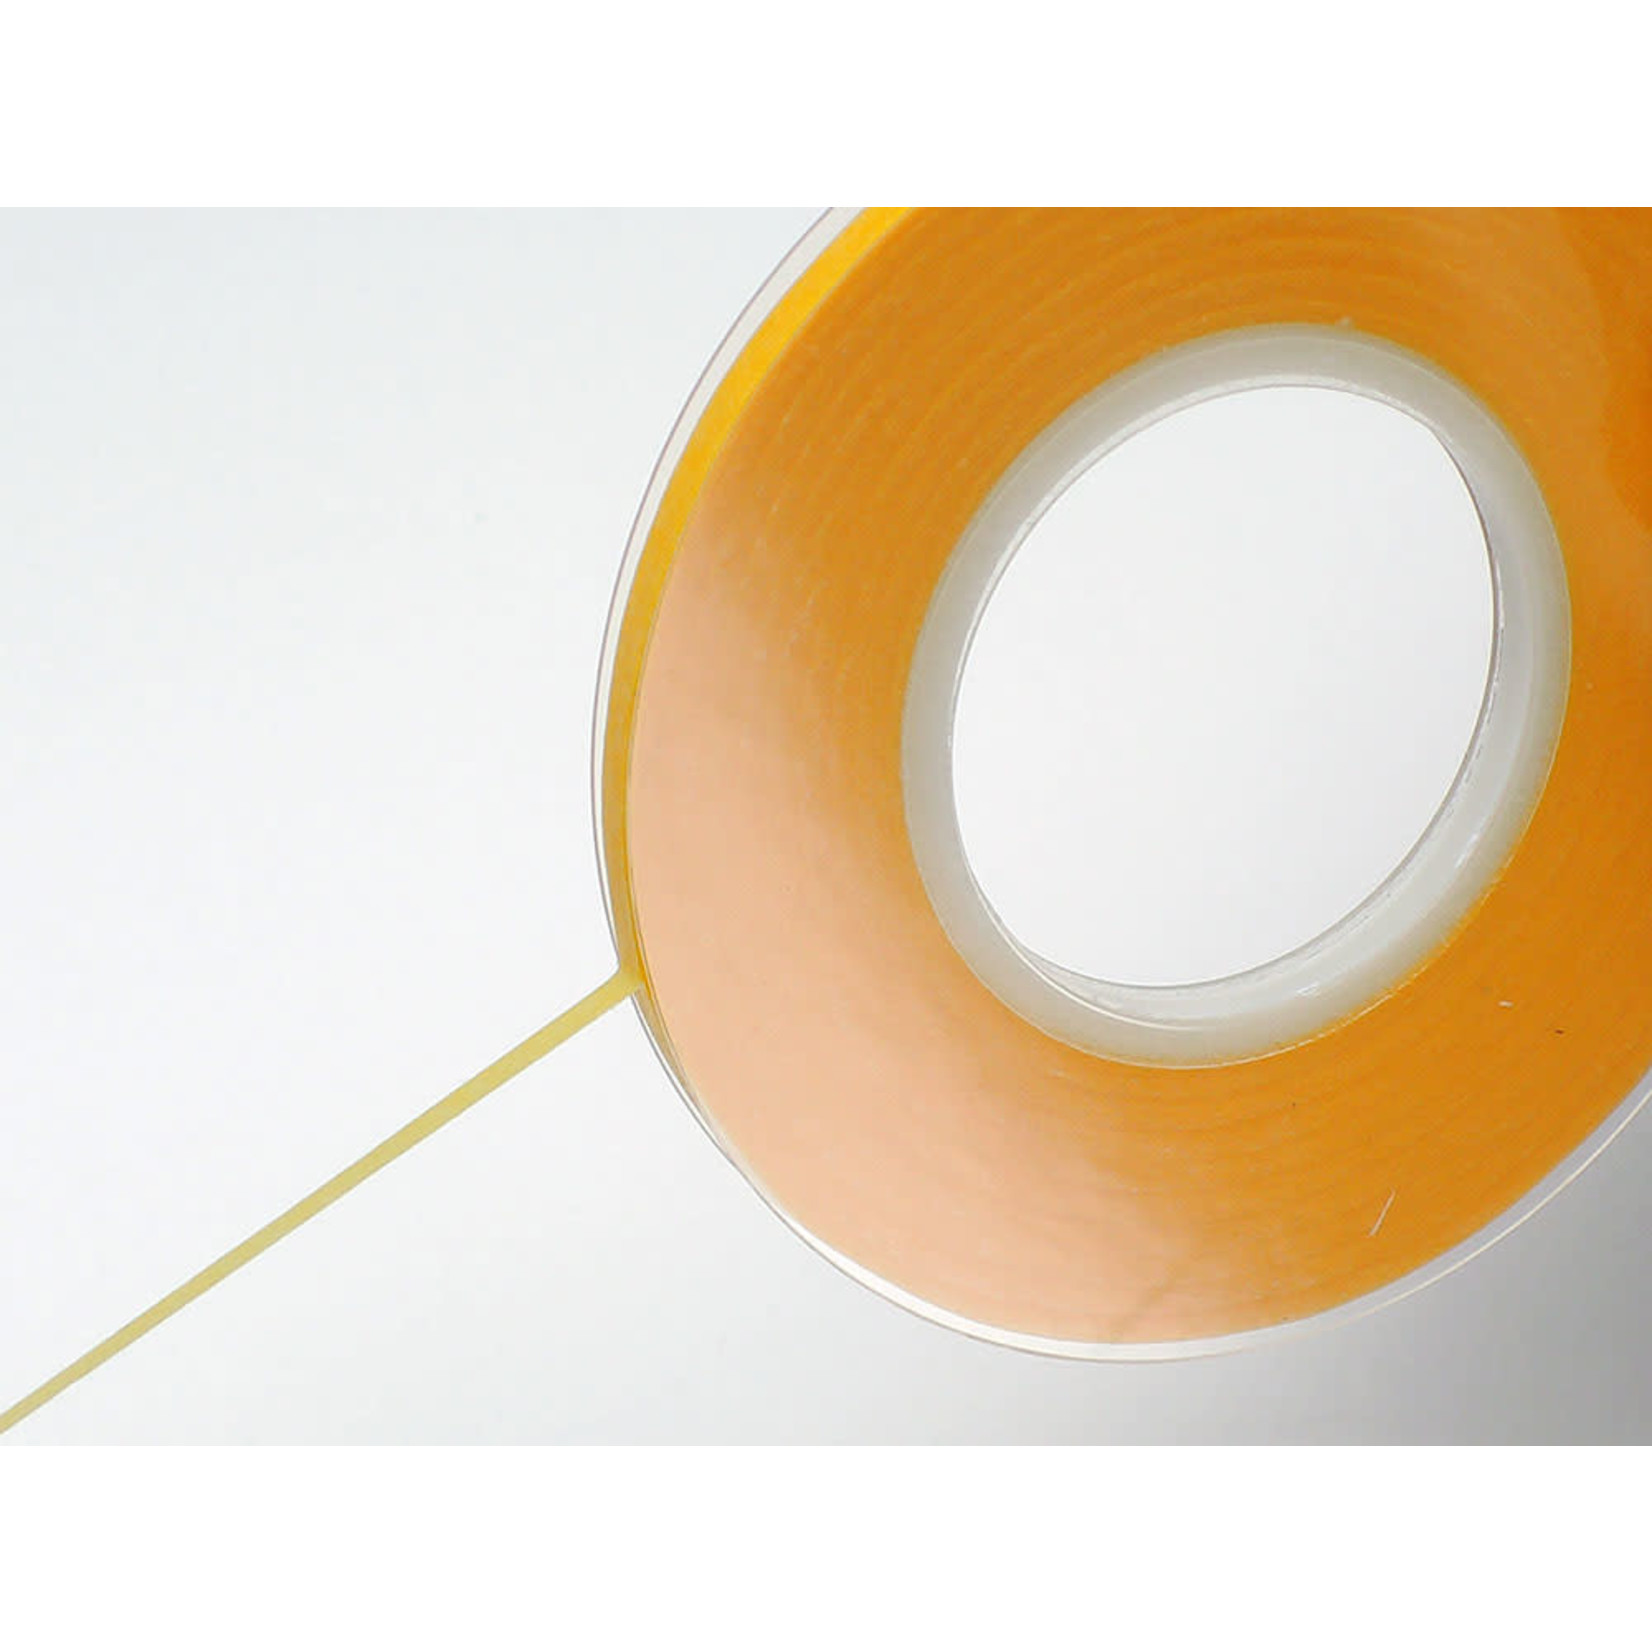 Tamiya Masking Tape, 1mm for curves